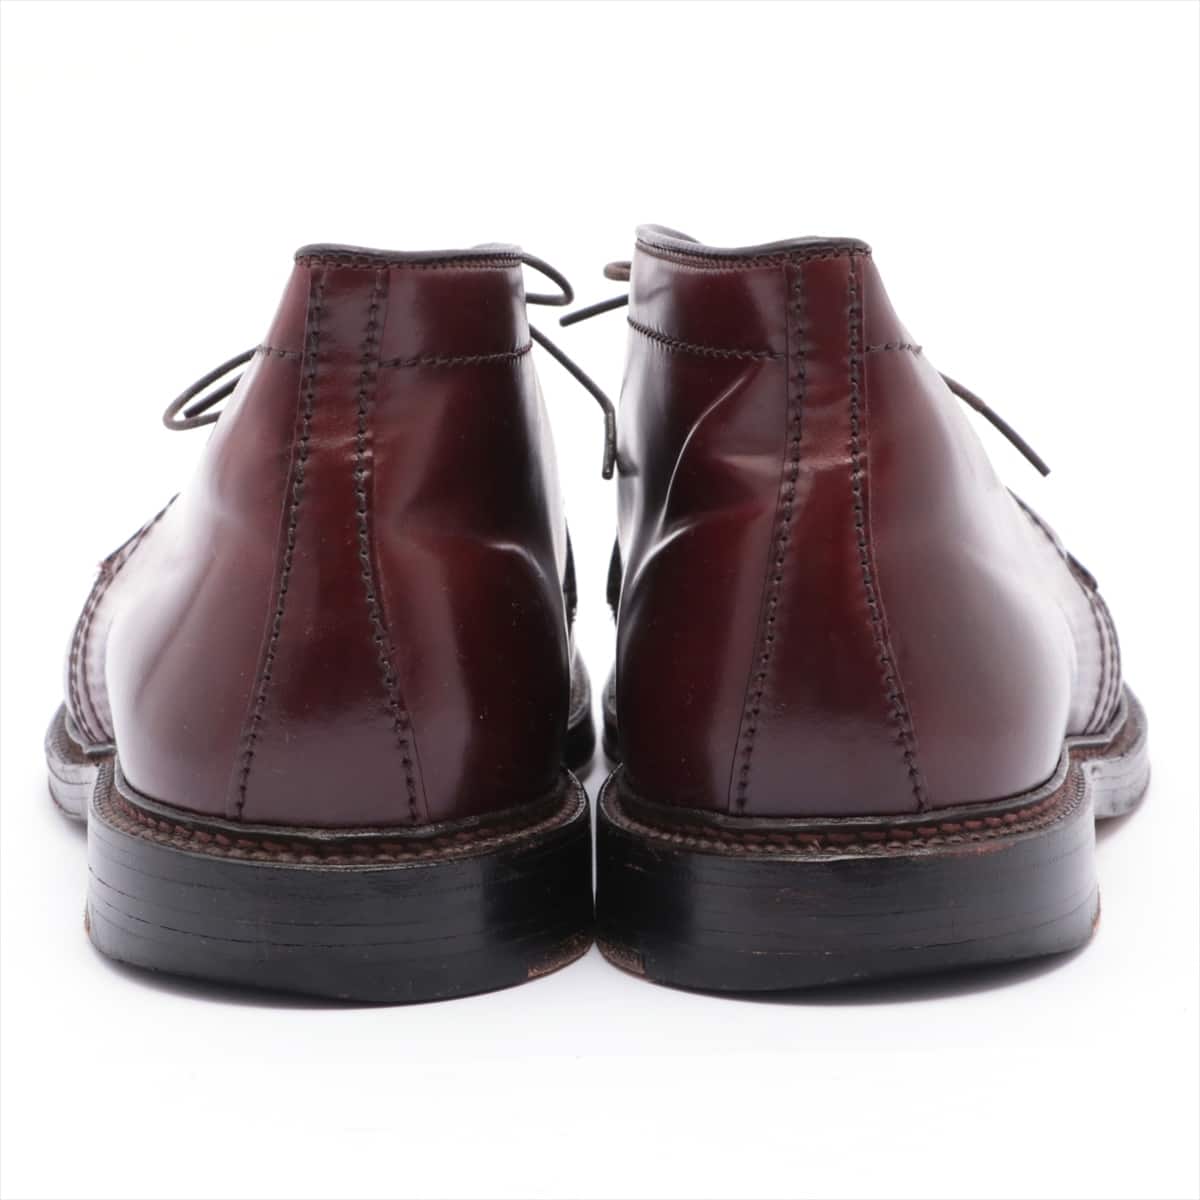 Alden Leather Chukka Boots 9 1/2 Men's Brown Cordovan